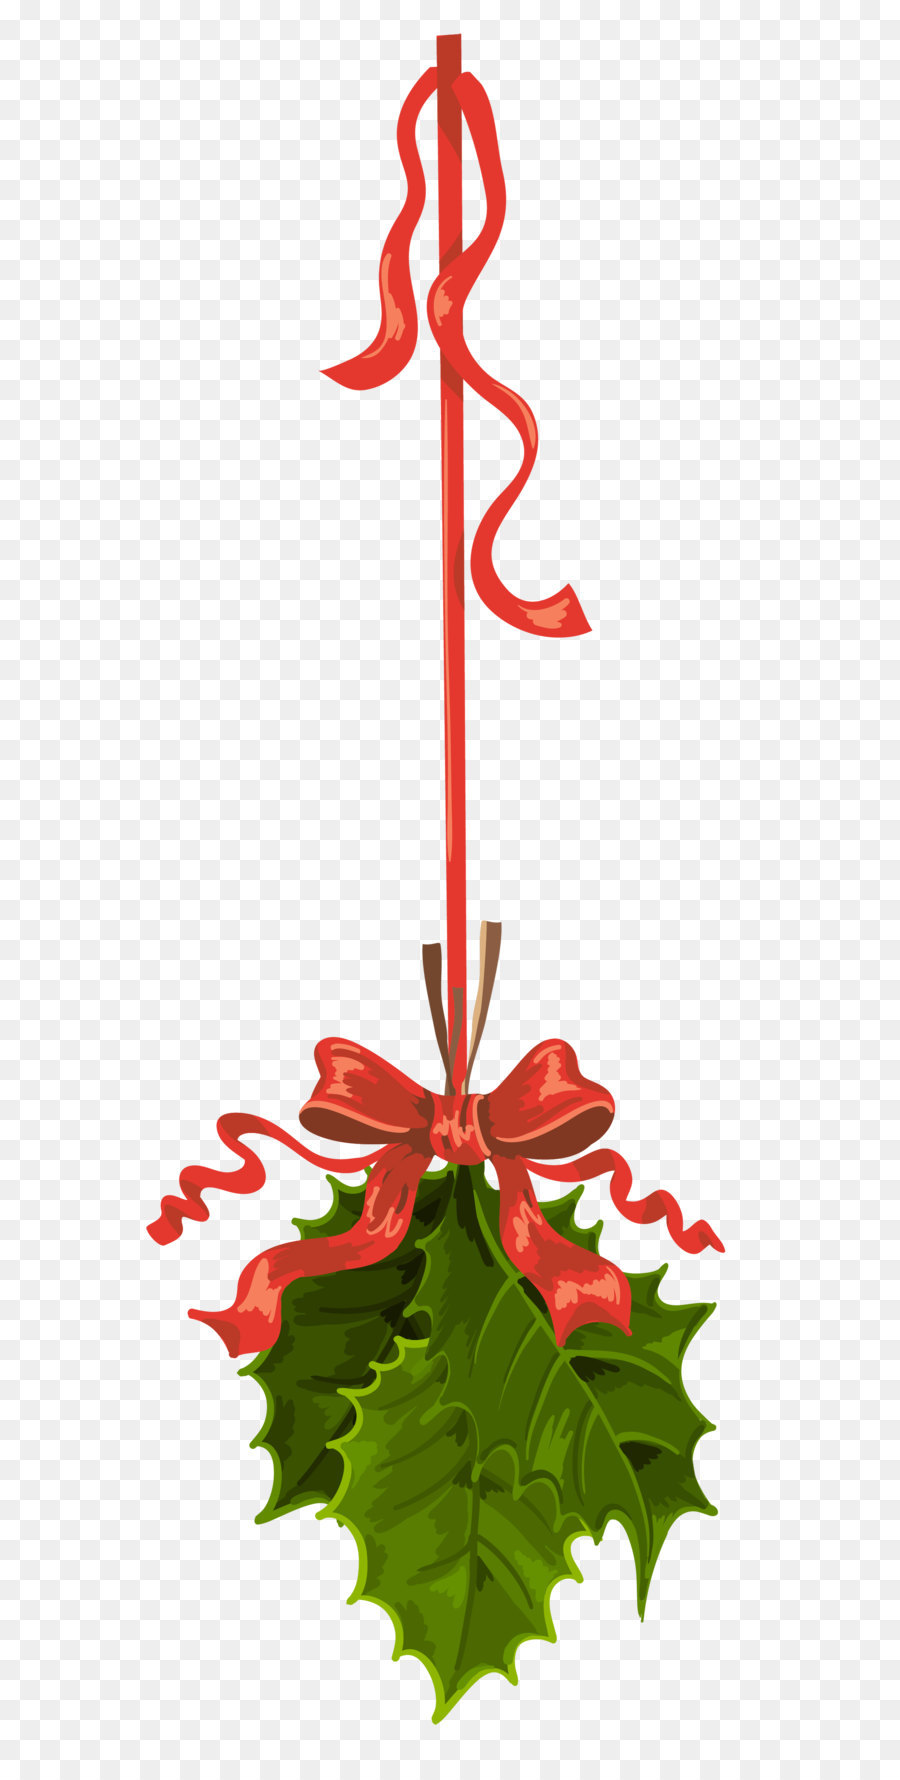 Mistletoe Christmas Clip art - Transparent Christmas Hanging Mistletoe PNG Clipart png download - 1670*4540 - Free Transparent Common Holly png Download.